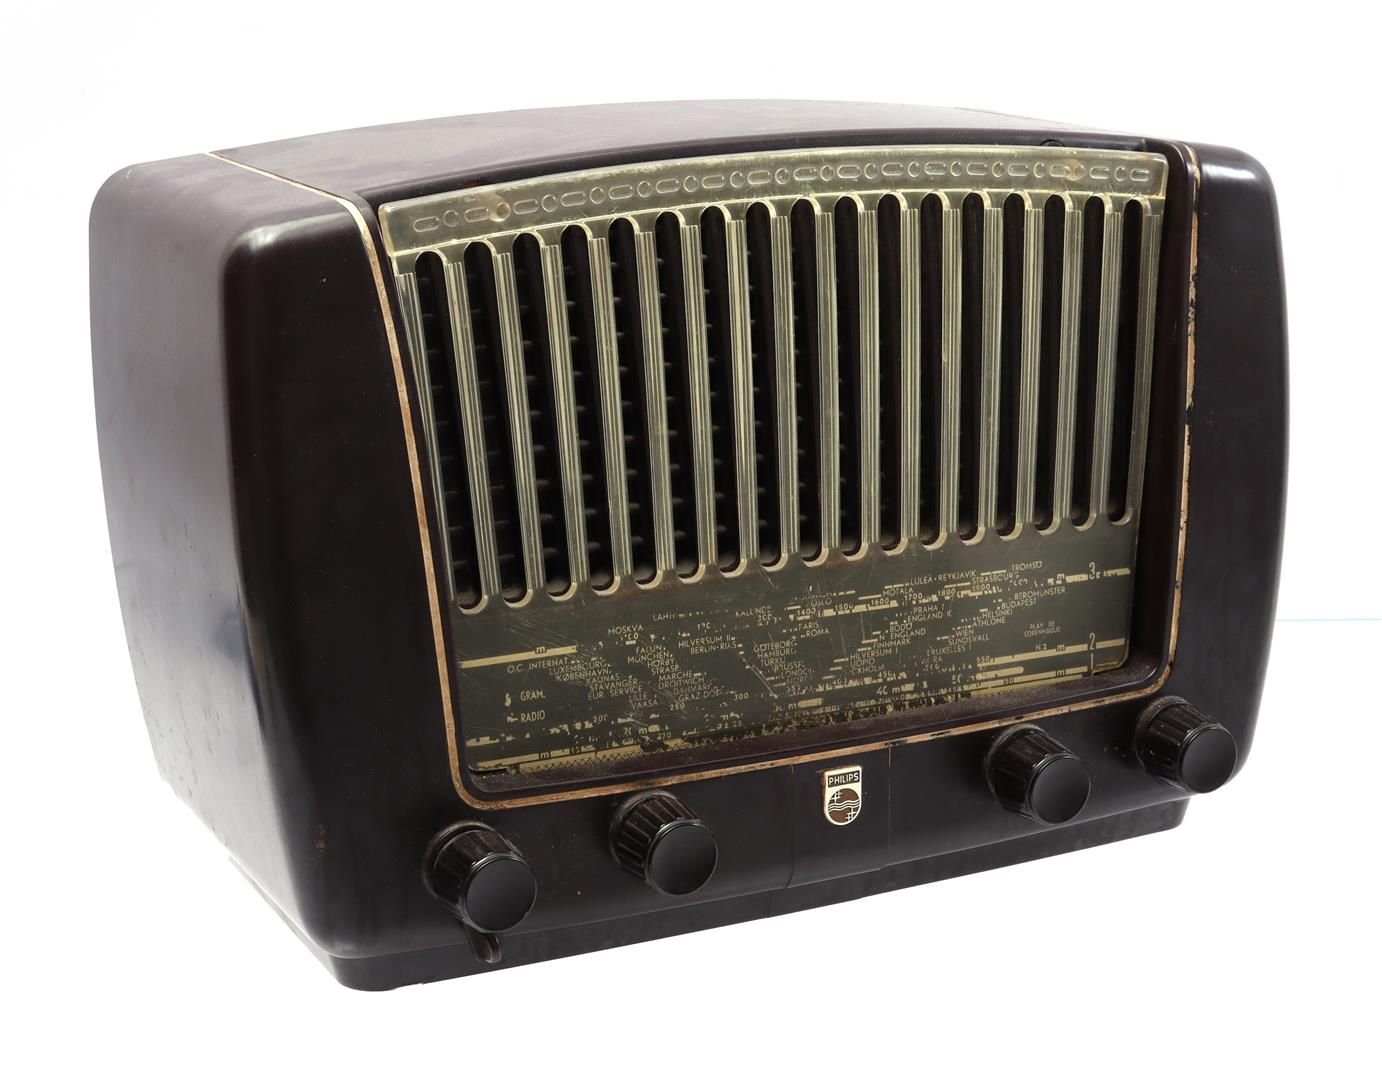 Philips BX310 bakelite radio Radio en bakélite Philips BX310, 37 cm de large